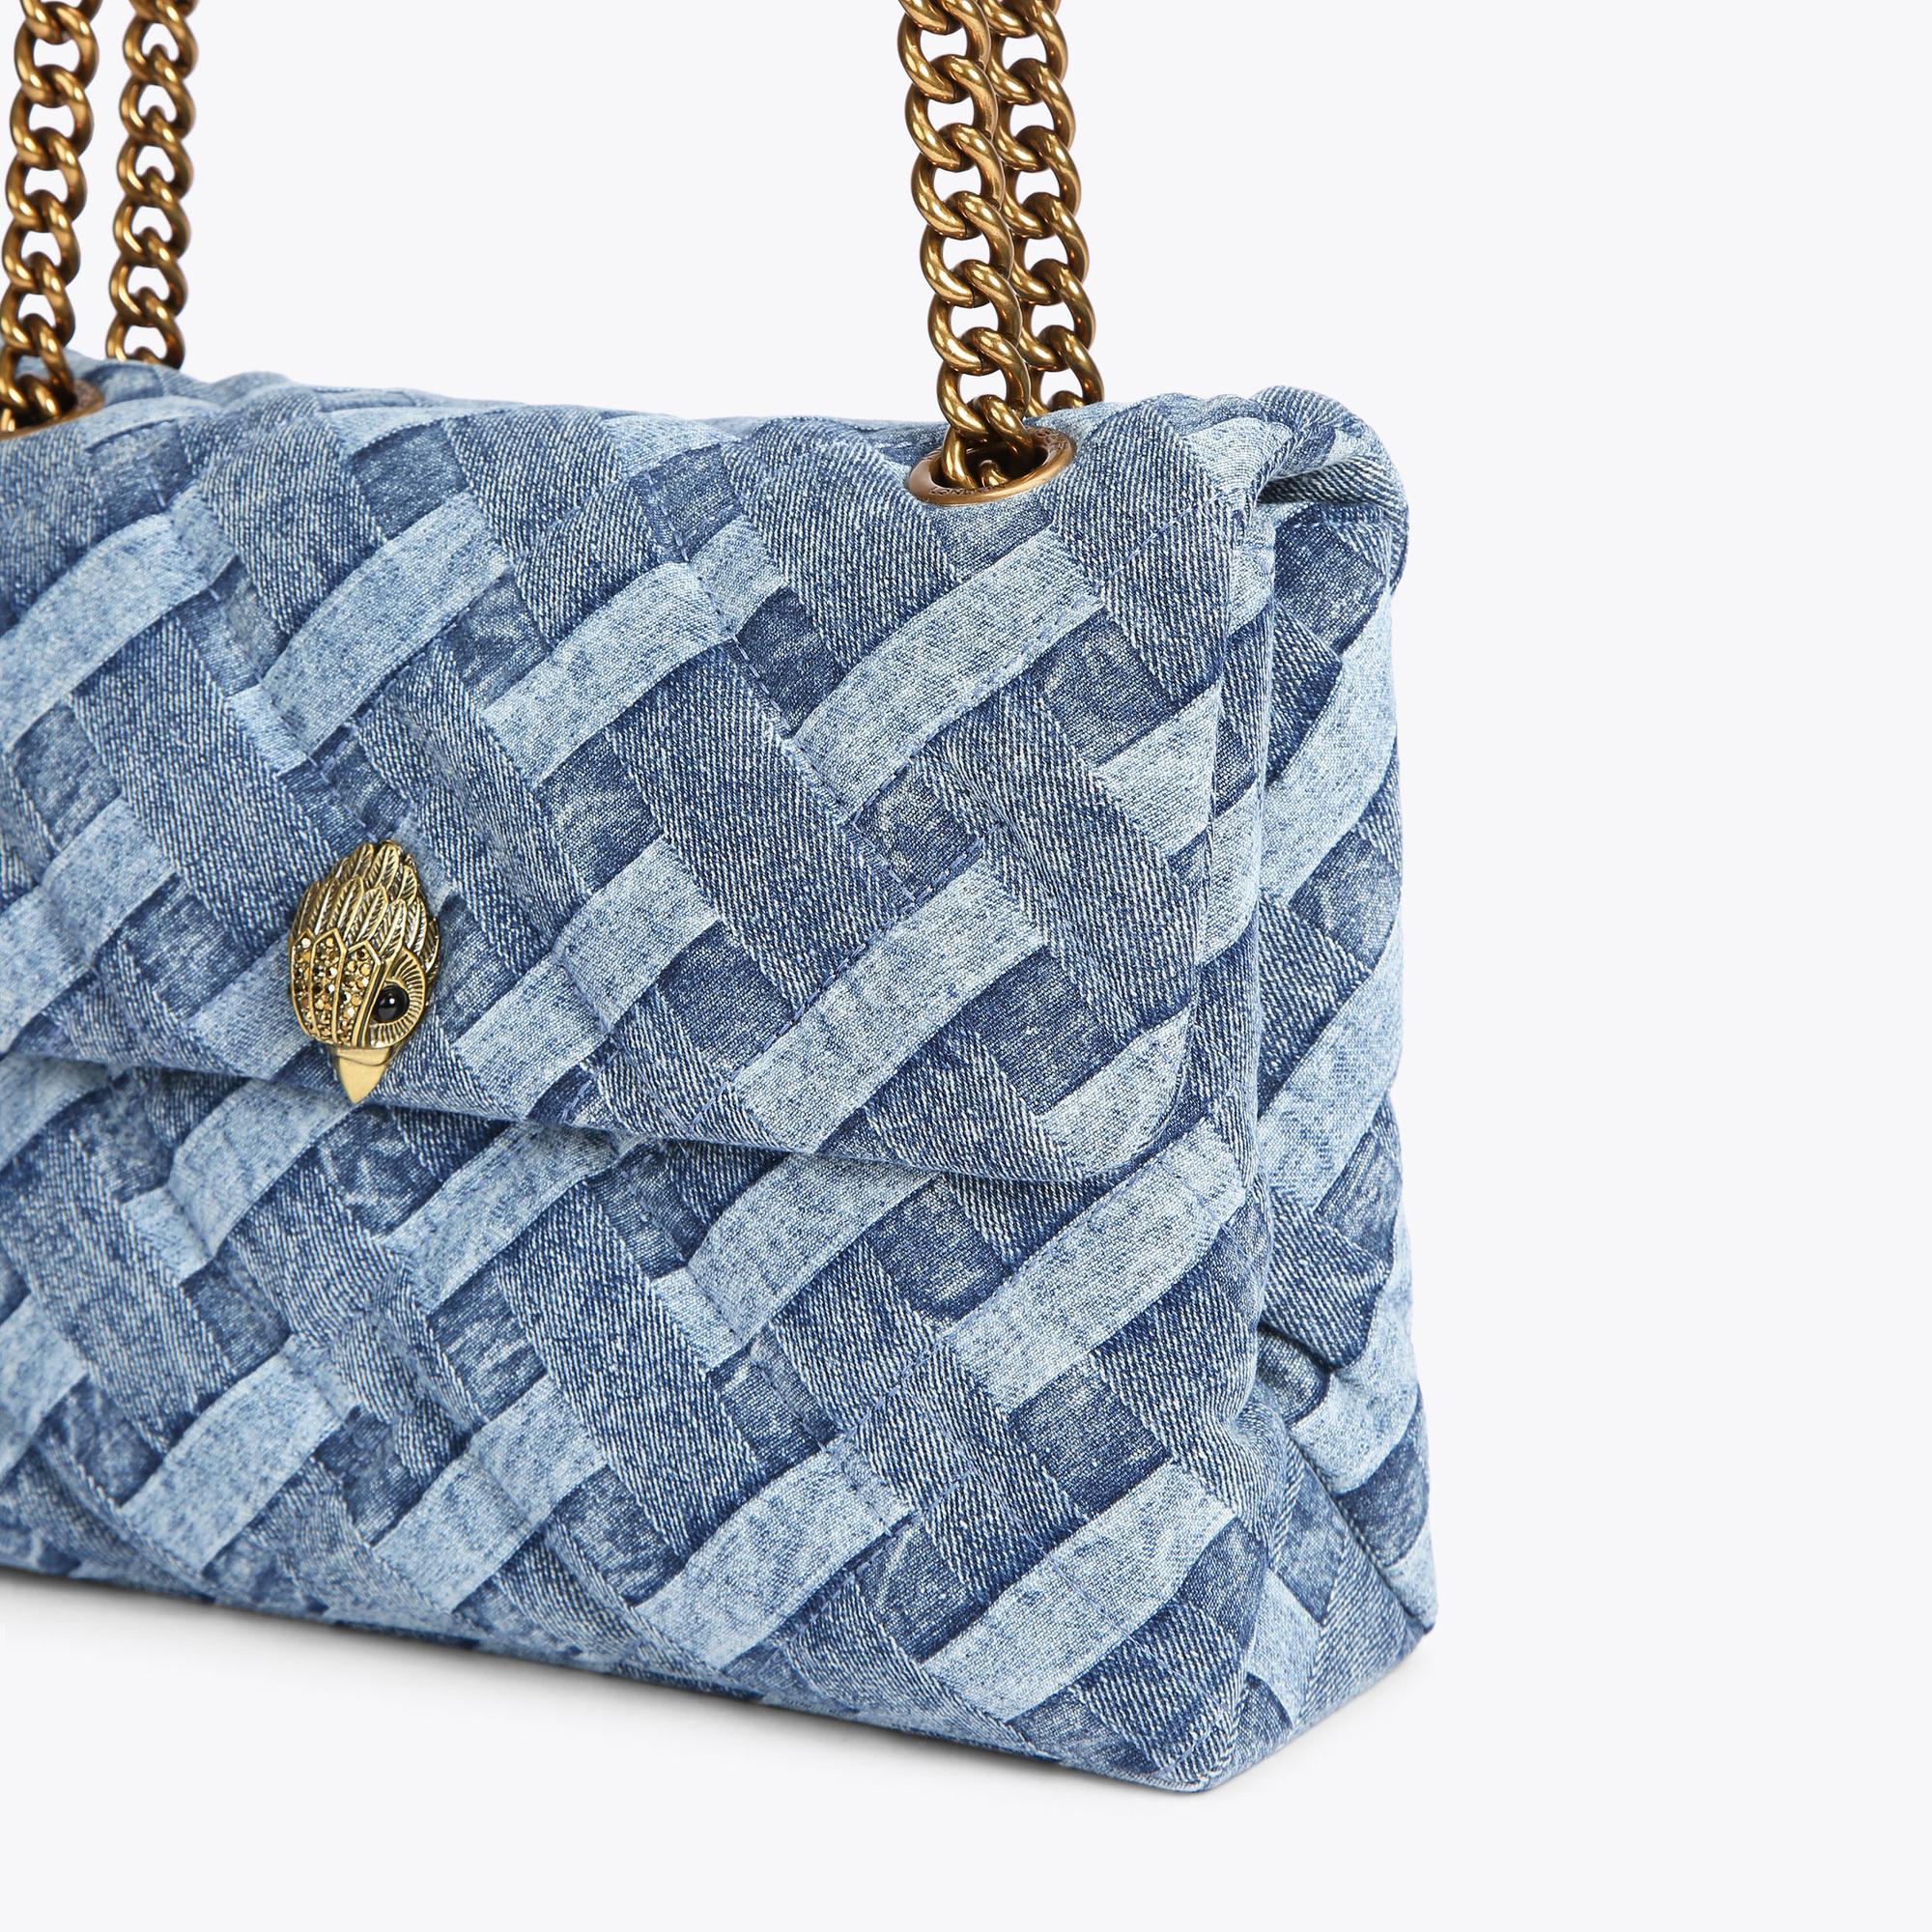 Ribbon-Decor Khaki-Blue Handbag